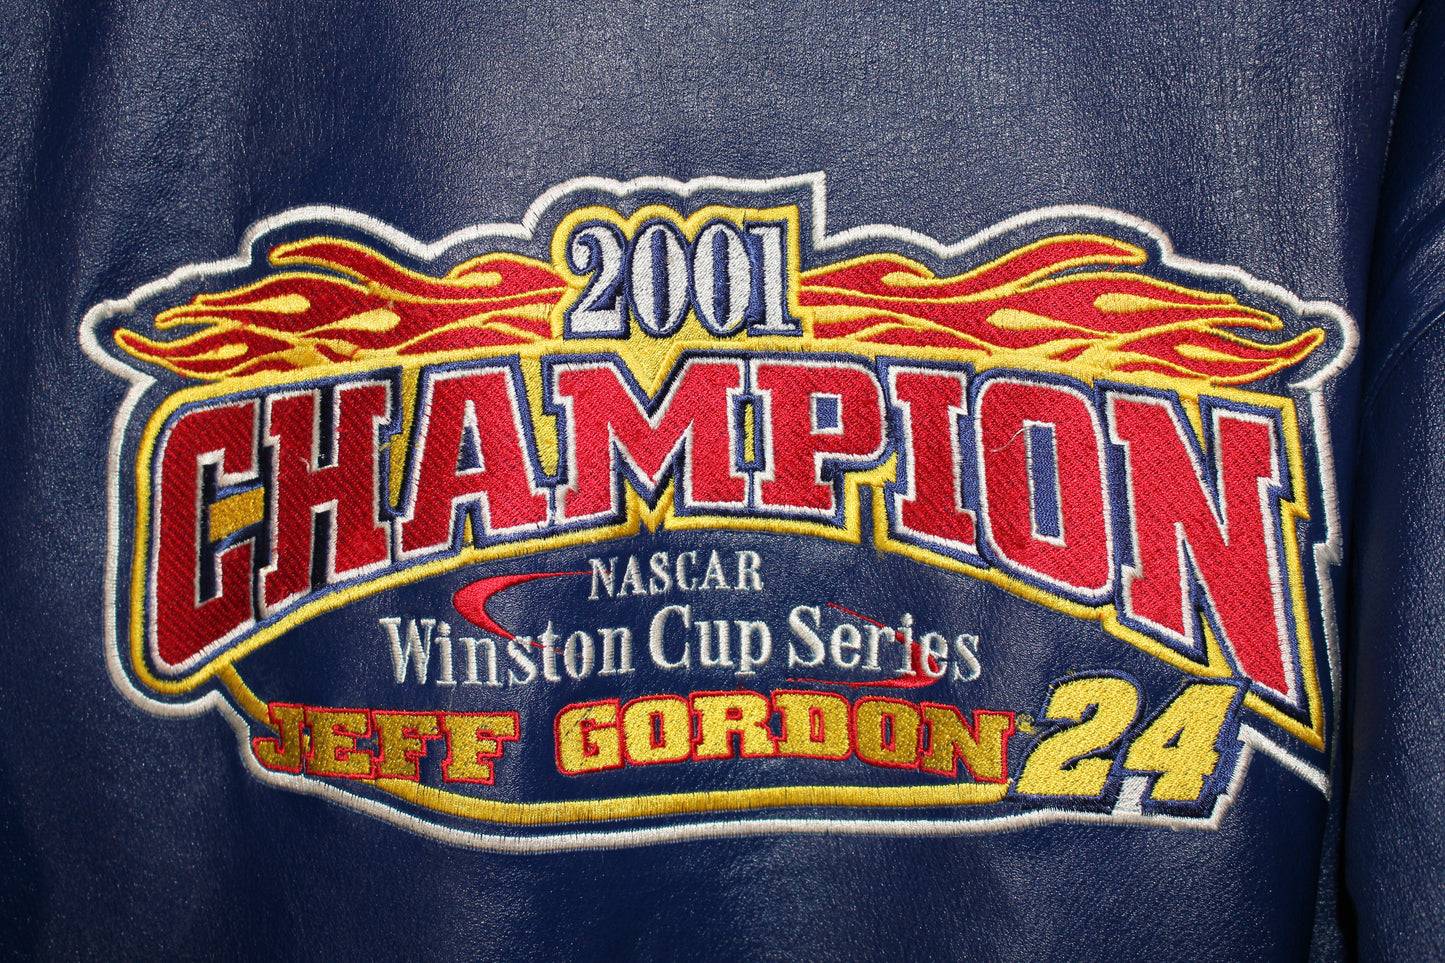 Jeff Hamilton Jacket NASCAR Jeff Gordon #24 Winston Cup Series 2001 Champion (L)